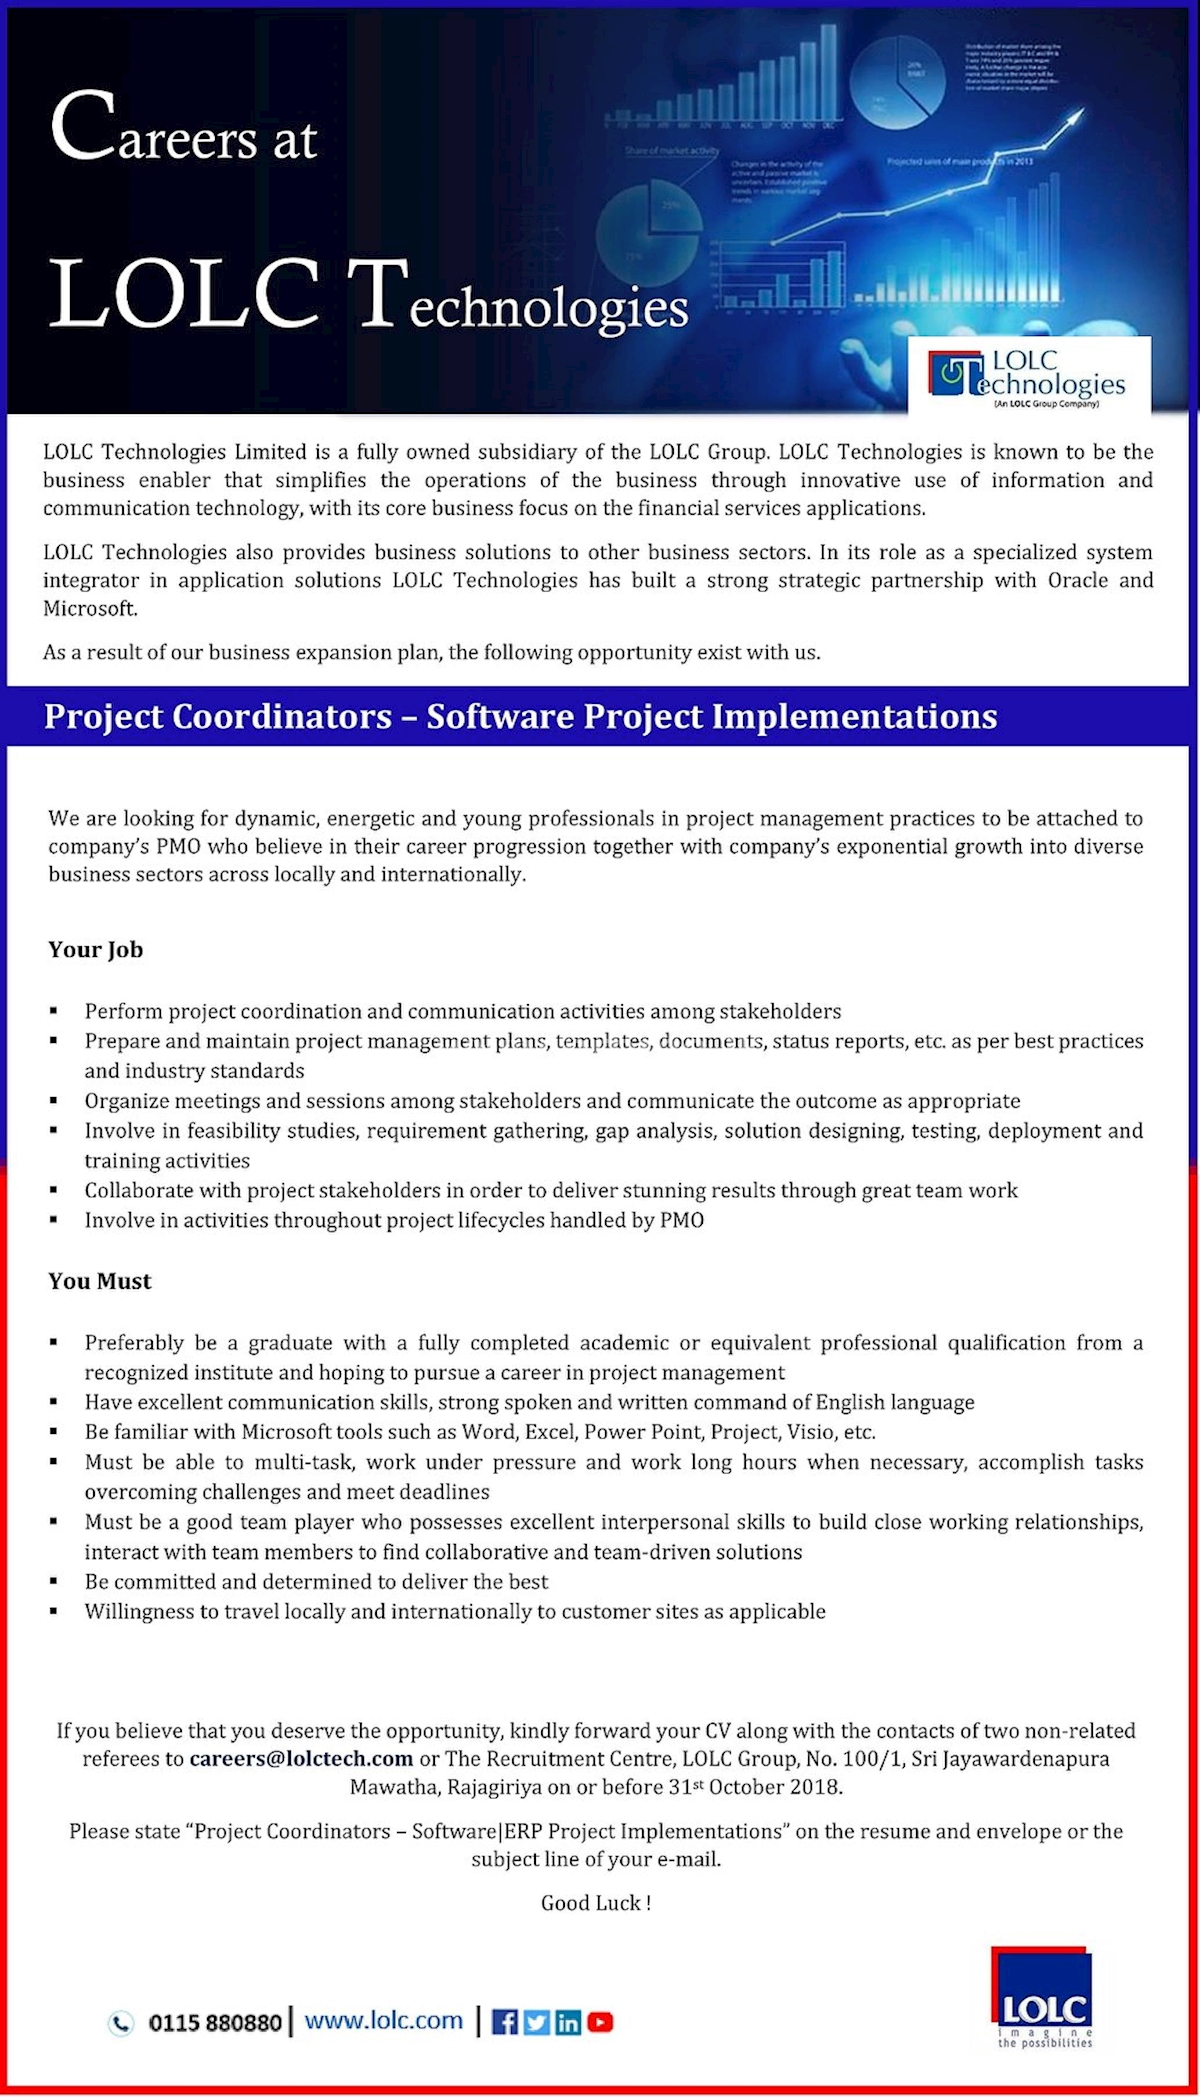 Project Coordinators - Software Project Implementations